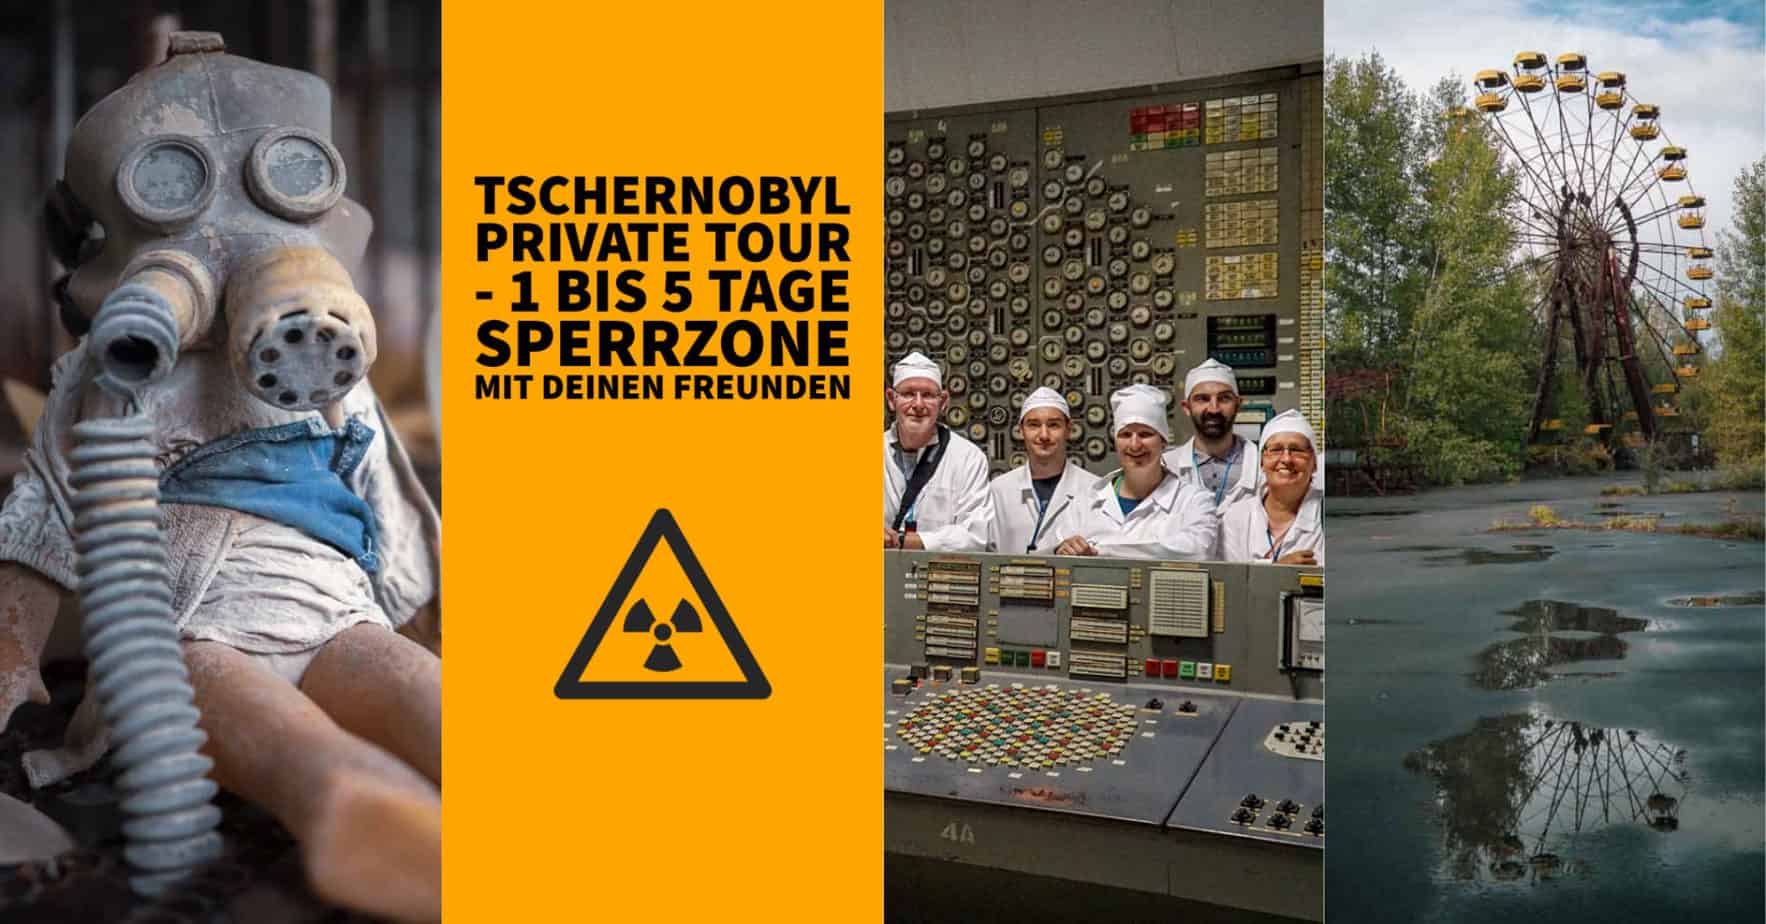 Tschernobyl Tour